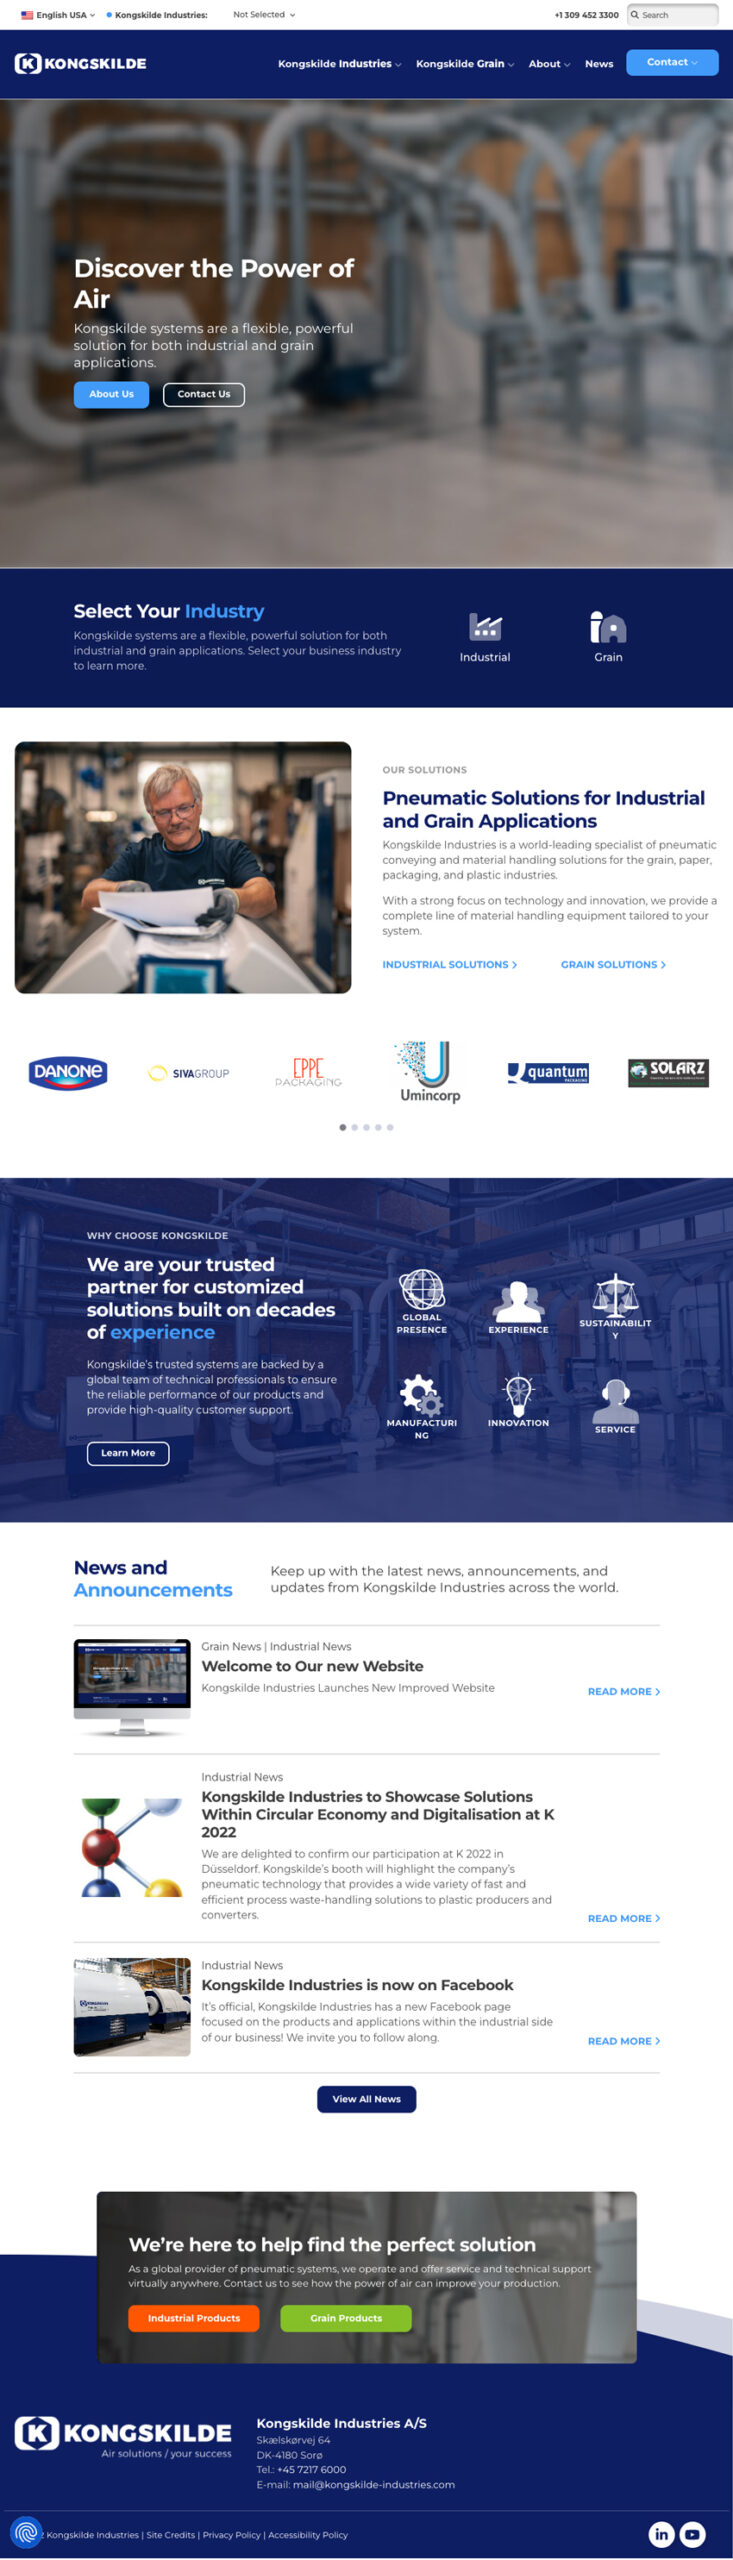 Manufacturing web design example: Kongskilde Website Homepage